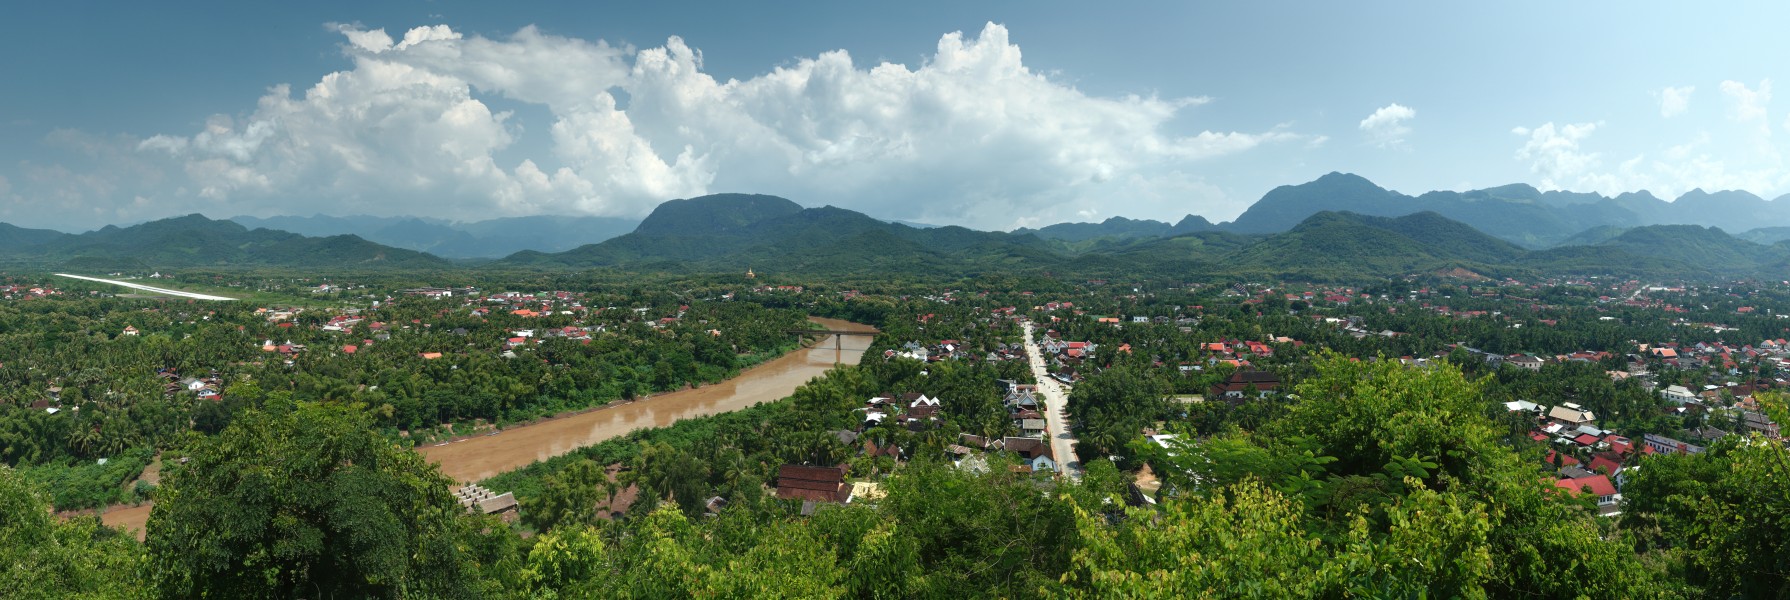 Luang Prabang pano Wikimedia Commons